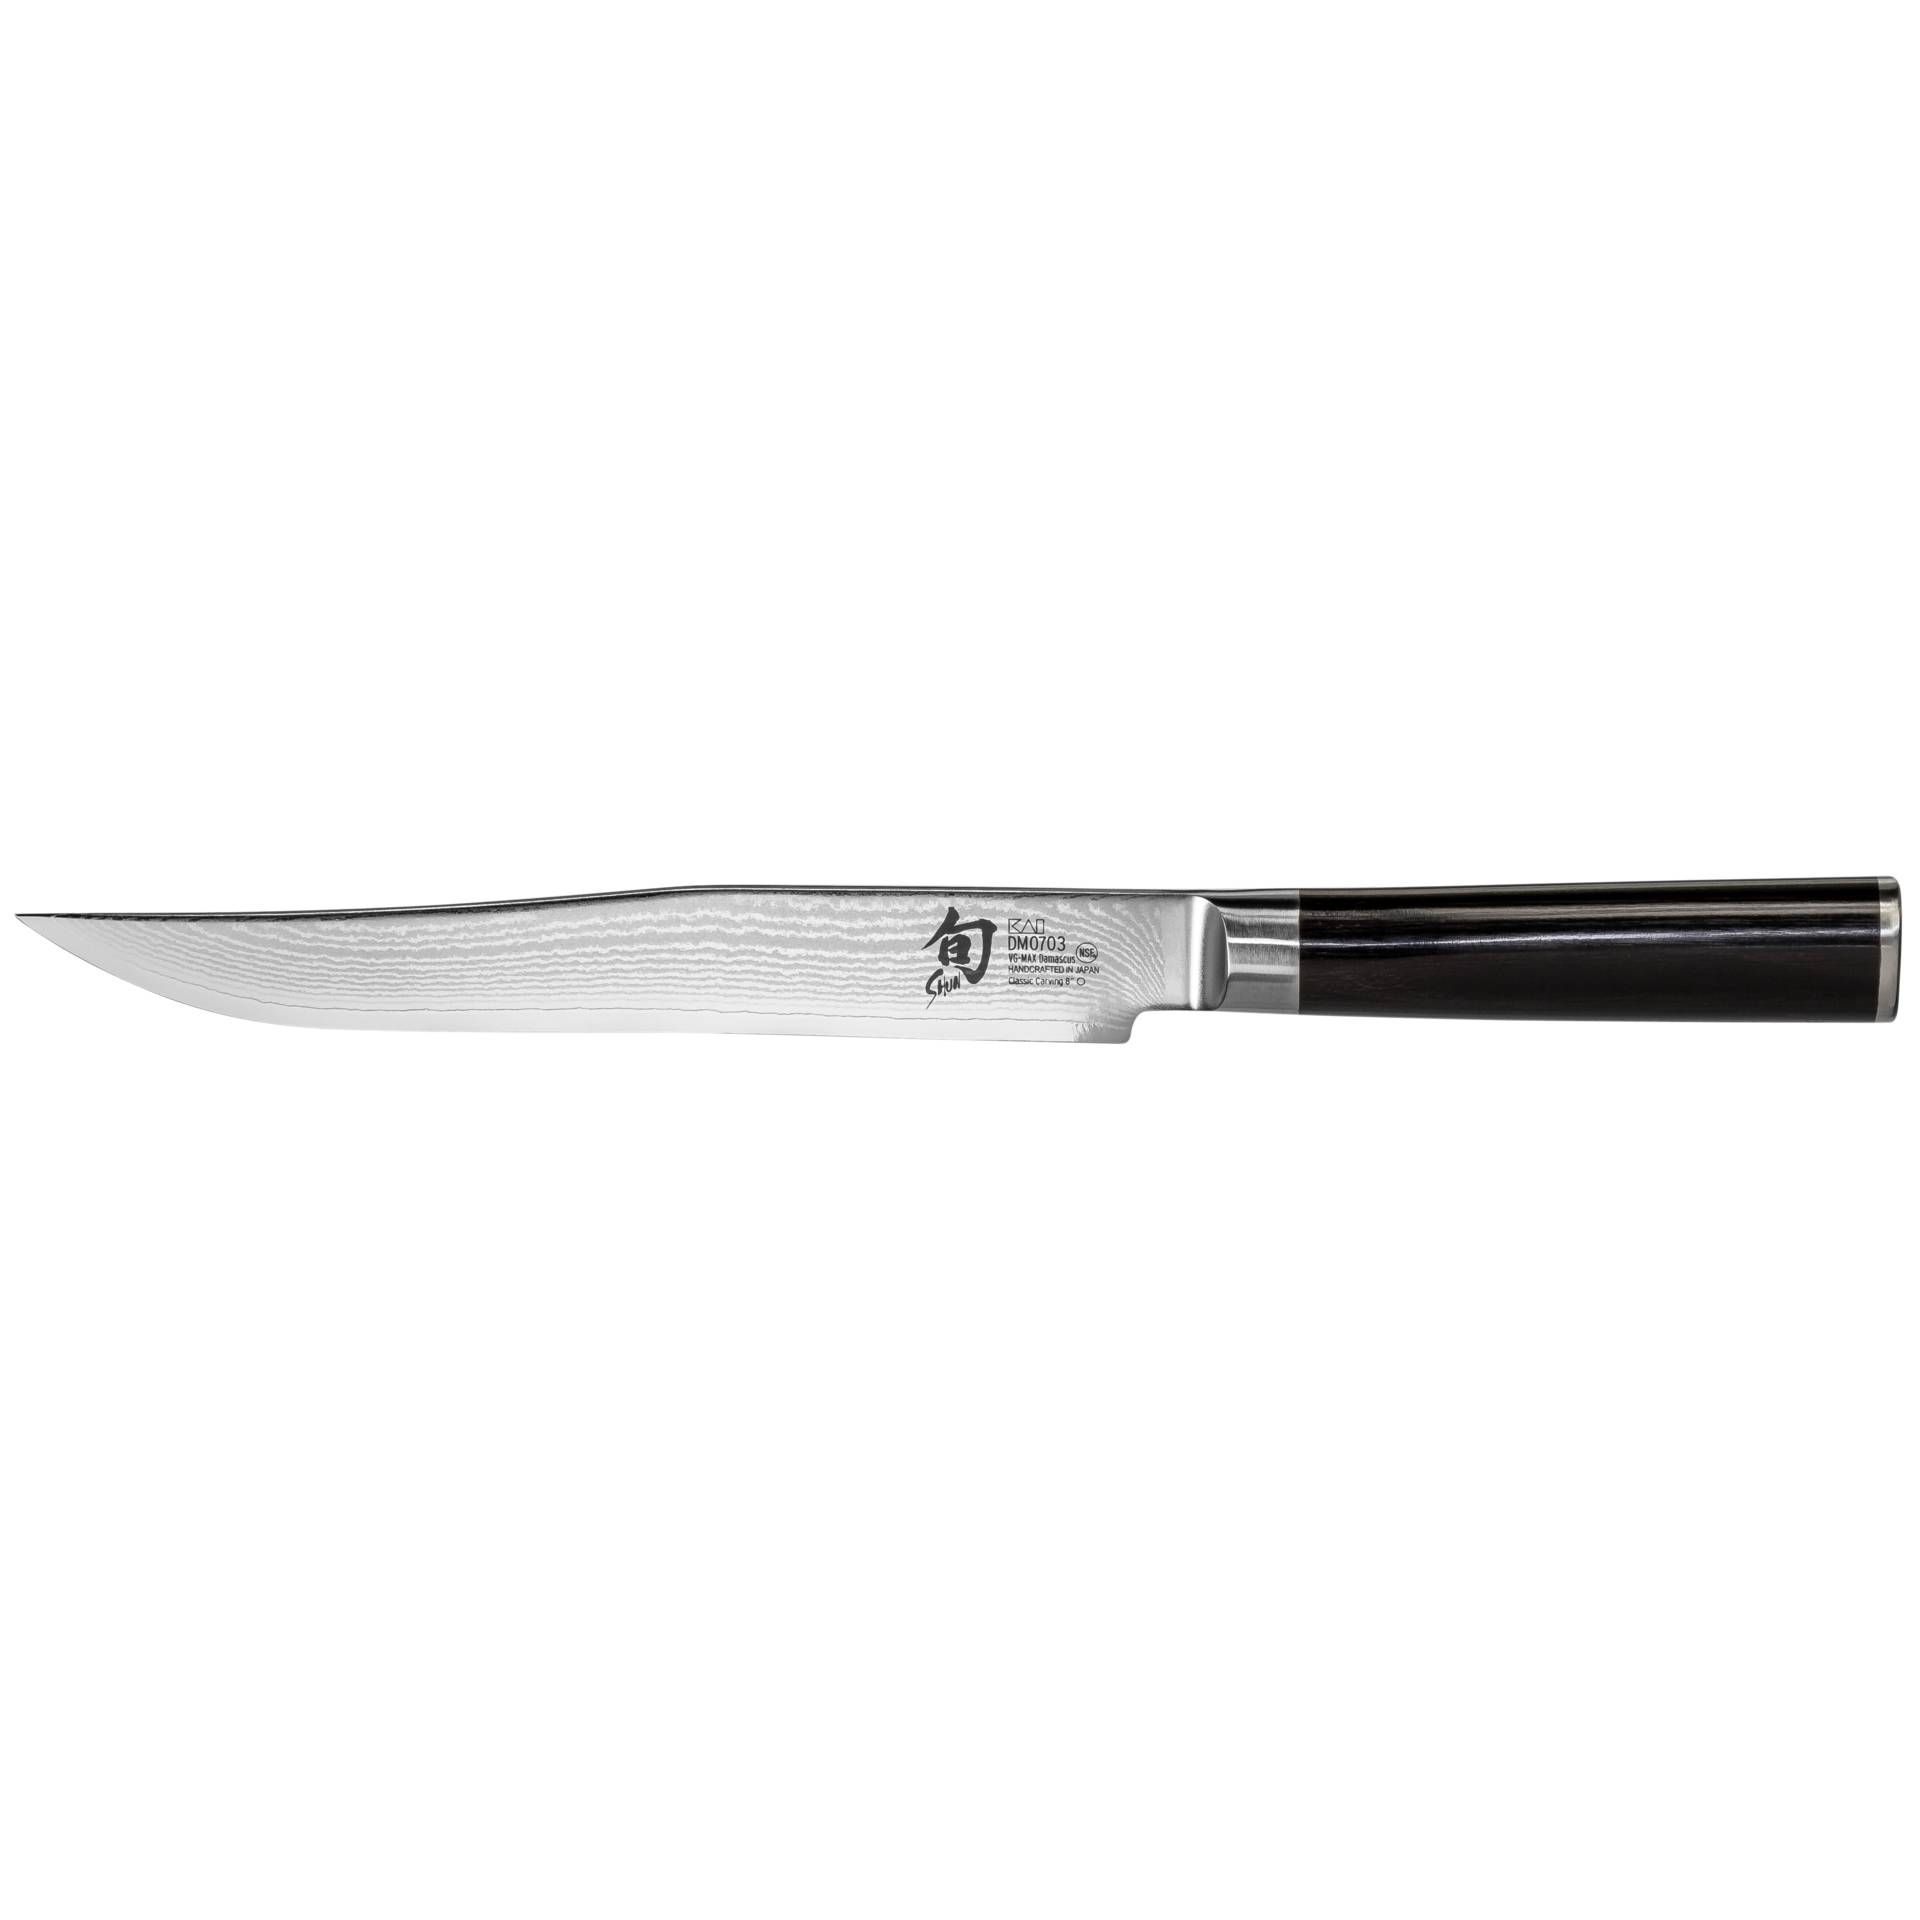 KAI Shun Classic coltello da cucina 20,0cm